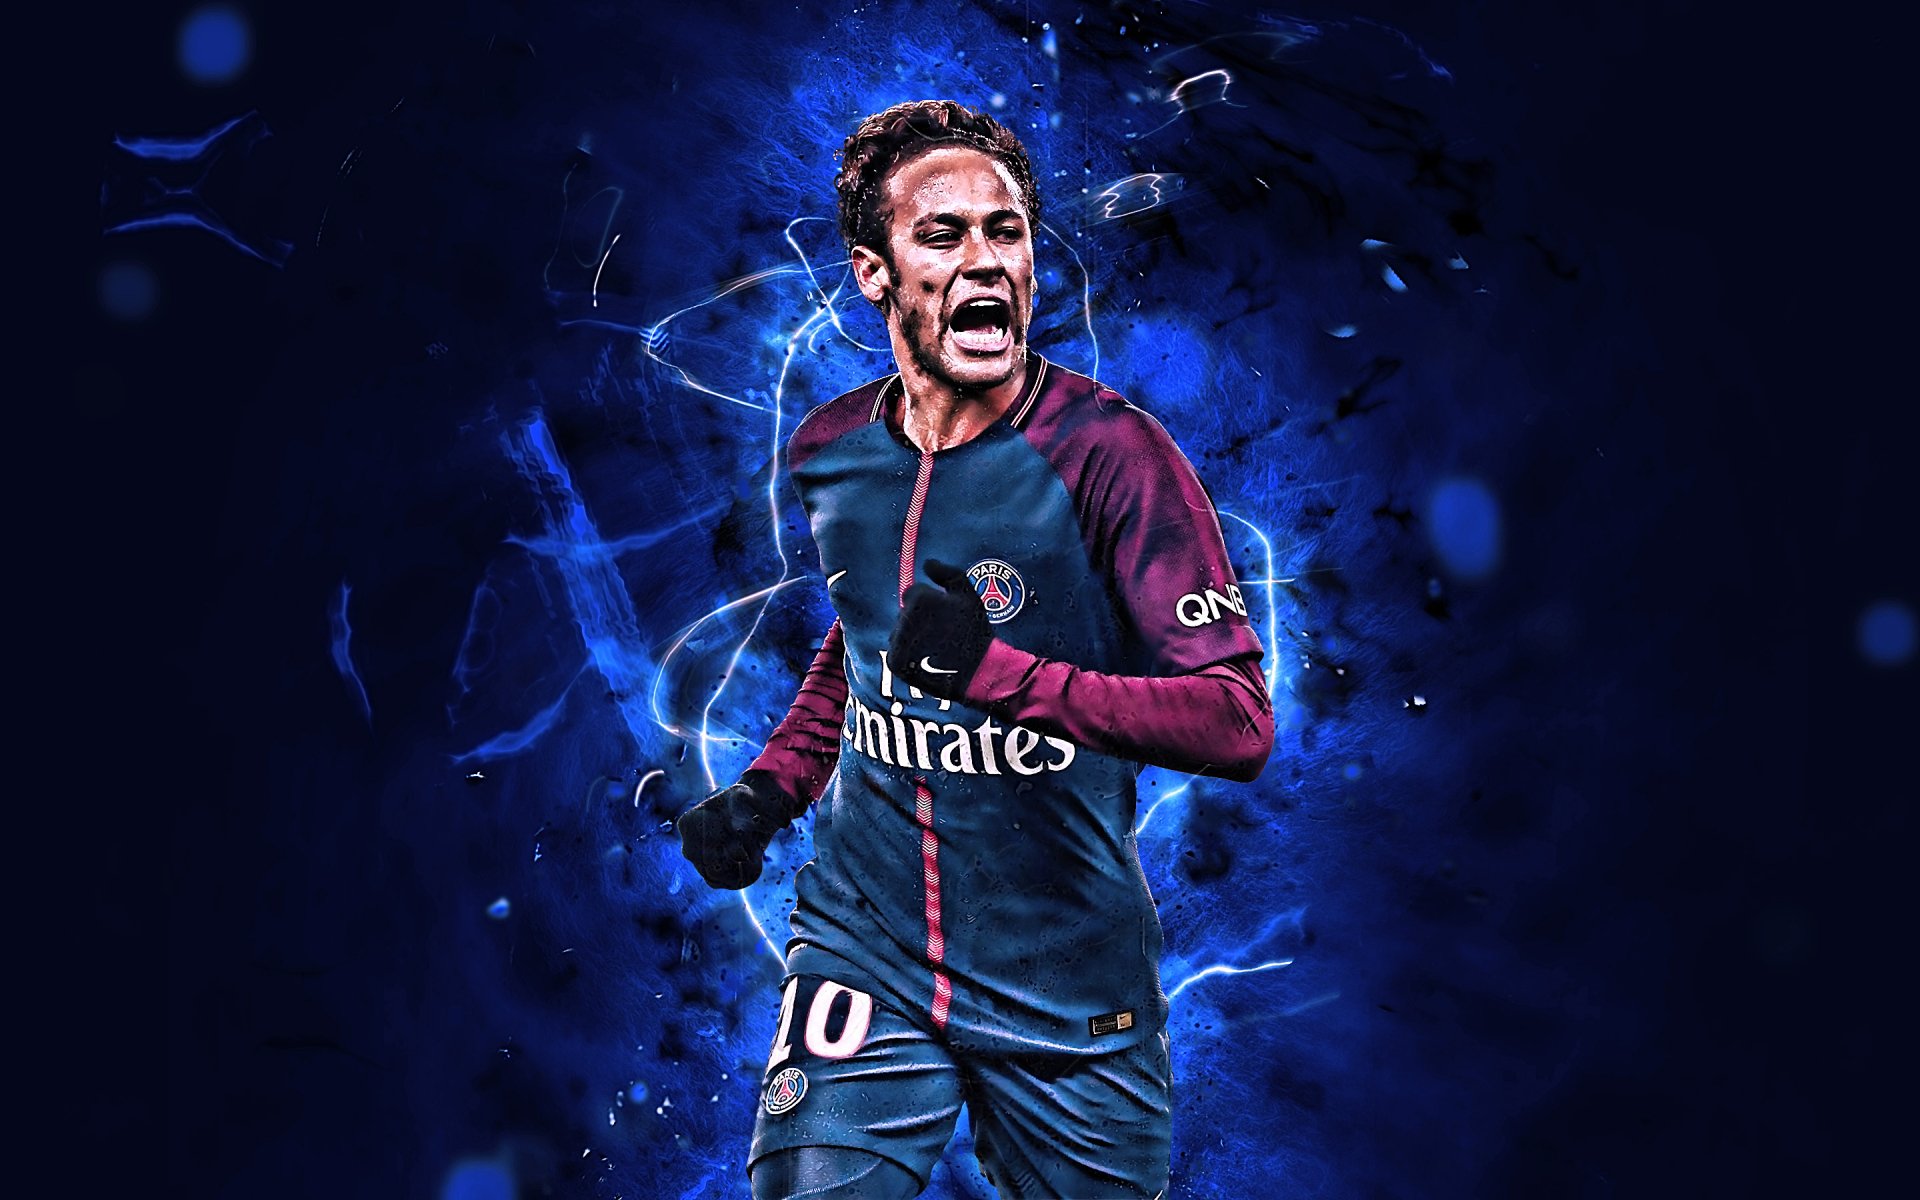 Neymar of Paris Saint-Germain F.C. in a Brazilian soccer HD desktop wallpaper, vibrant colors showcasing sports passion.